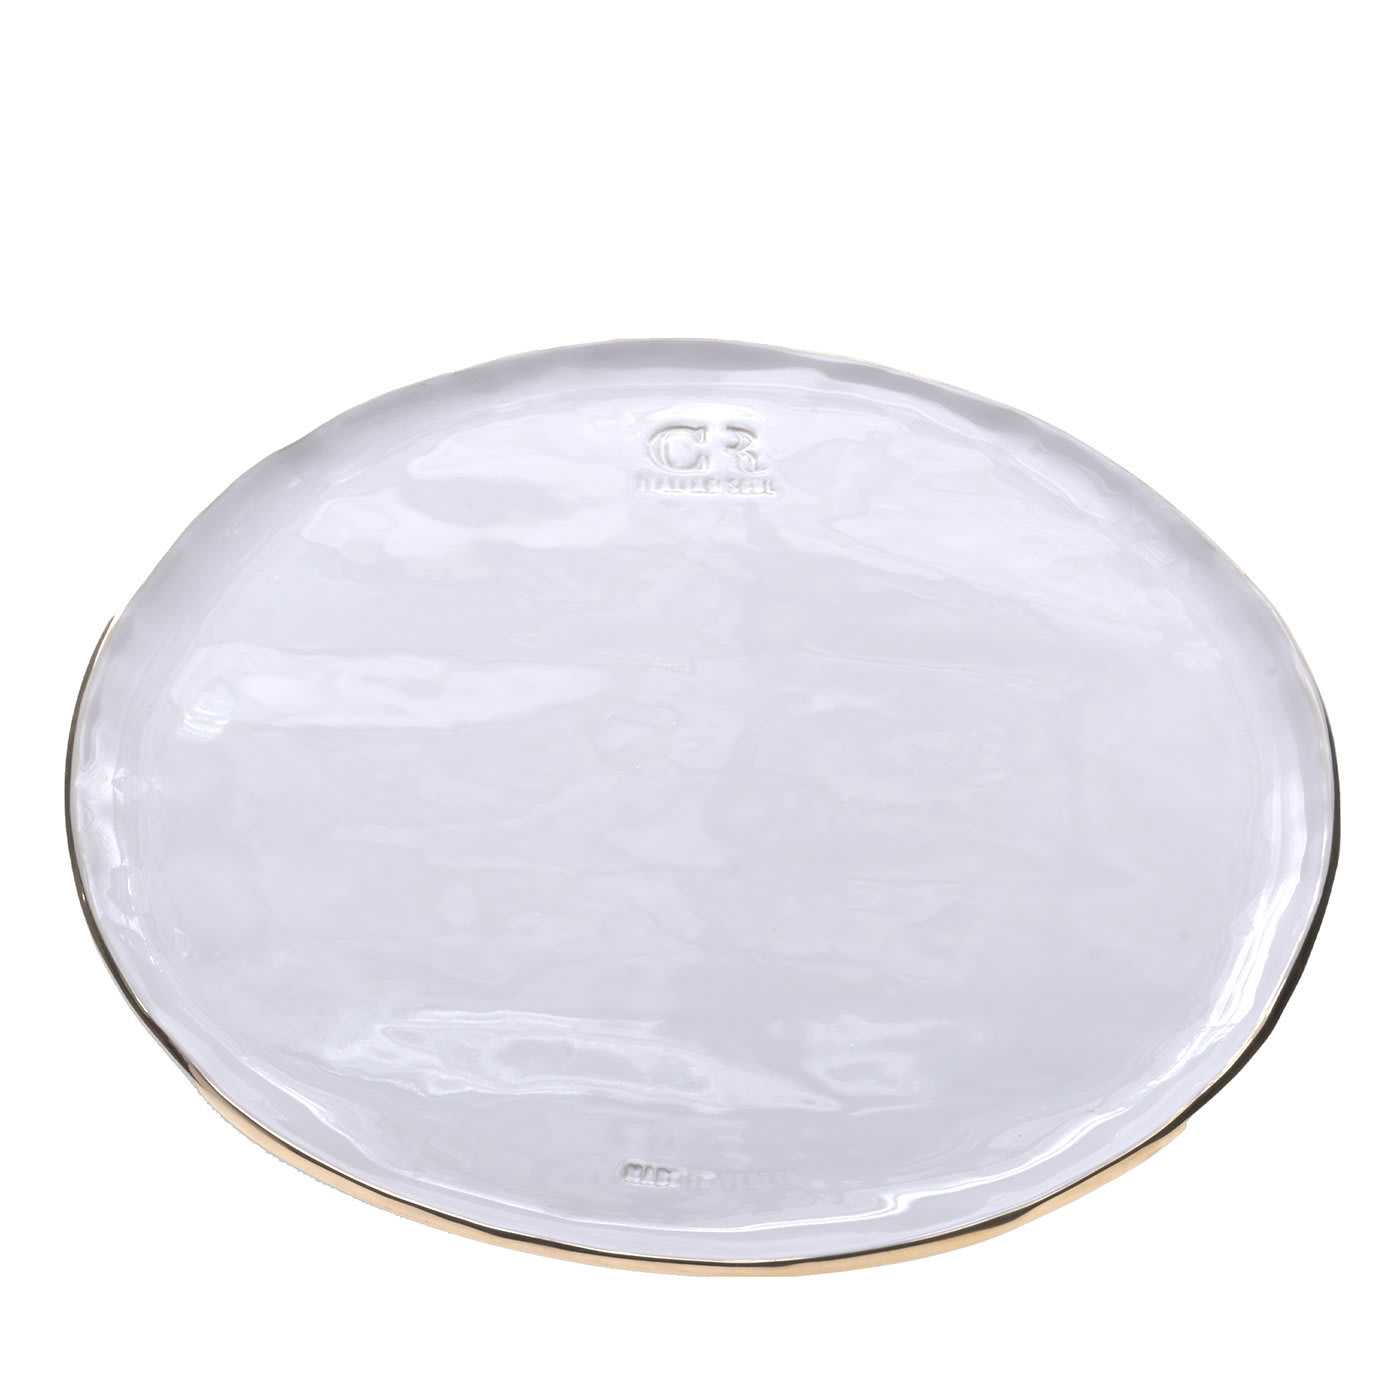 White Ceramic Tray with Gold Rim - Casarialto